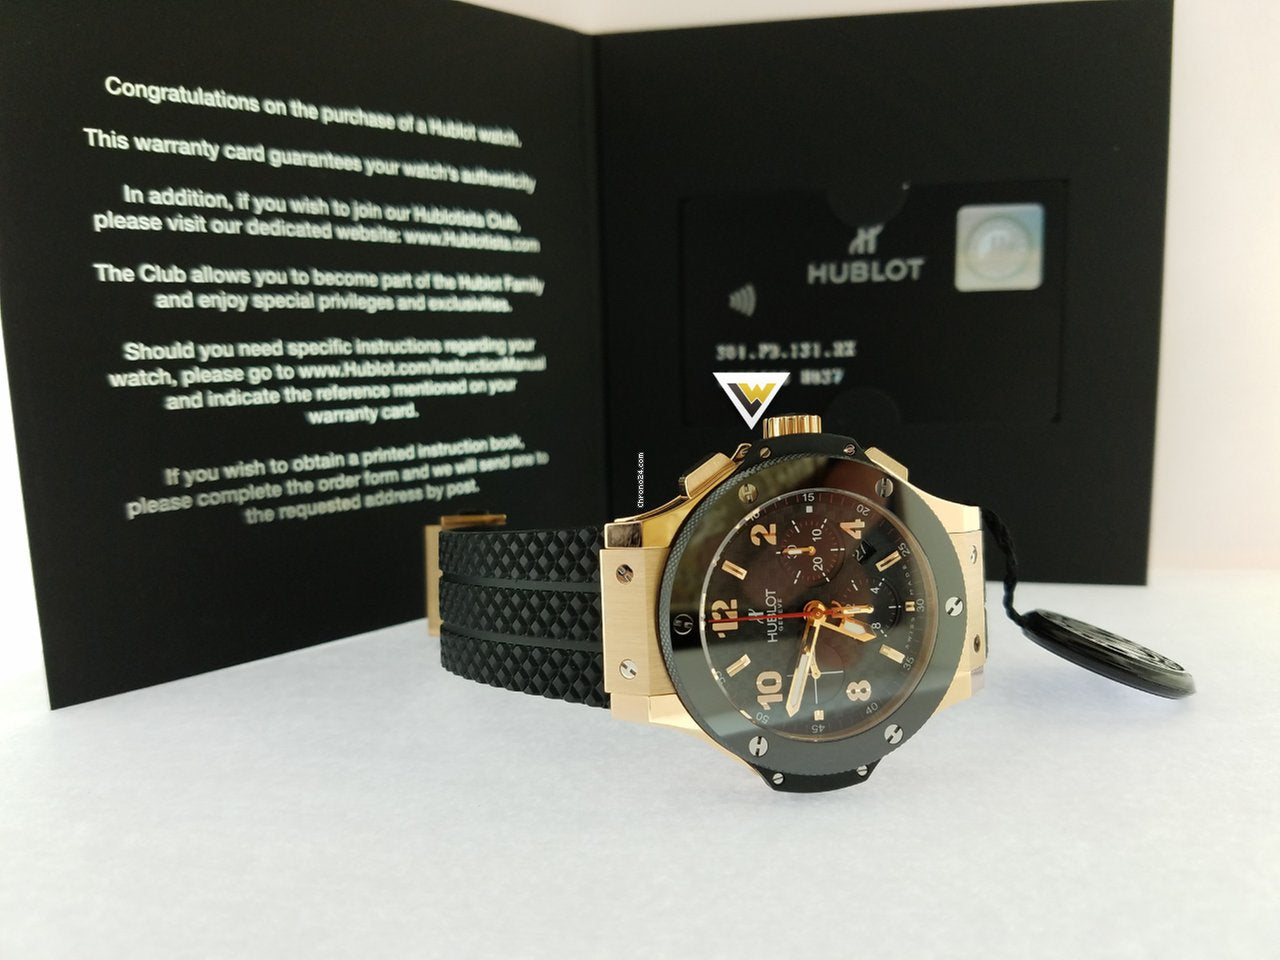 Hublot Big Bang Rose Gold Ceramic Rubber Chronograph Automatic Men's Watch, 341.PB.131.RX